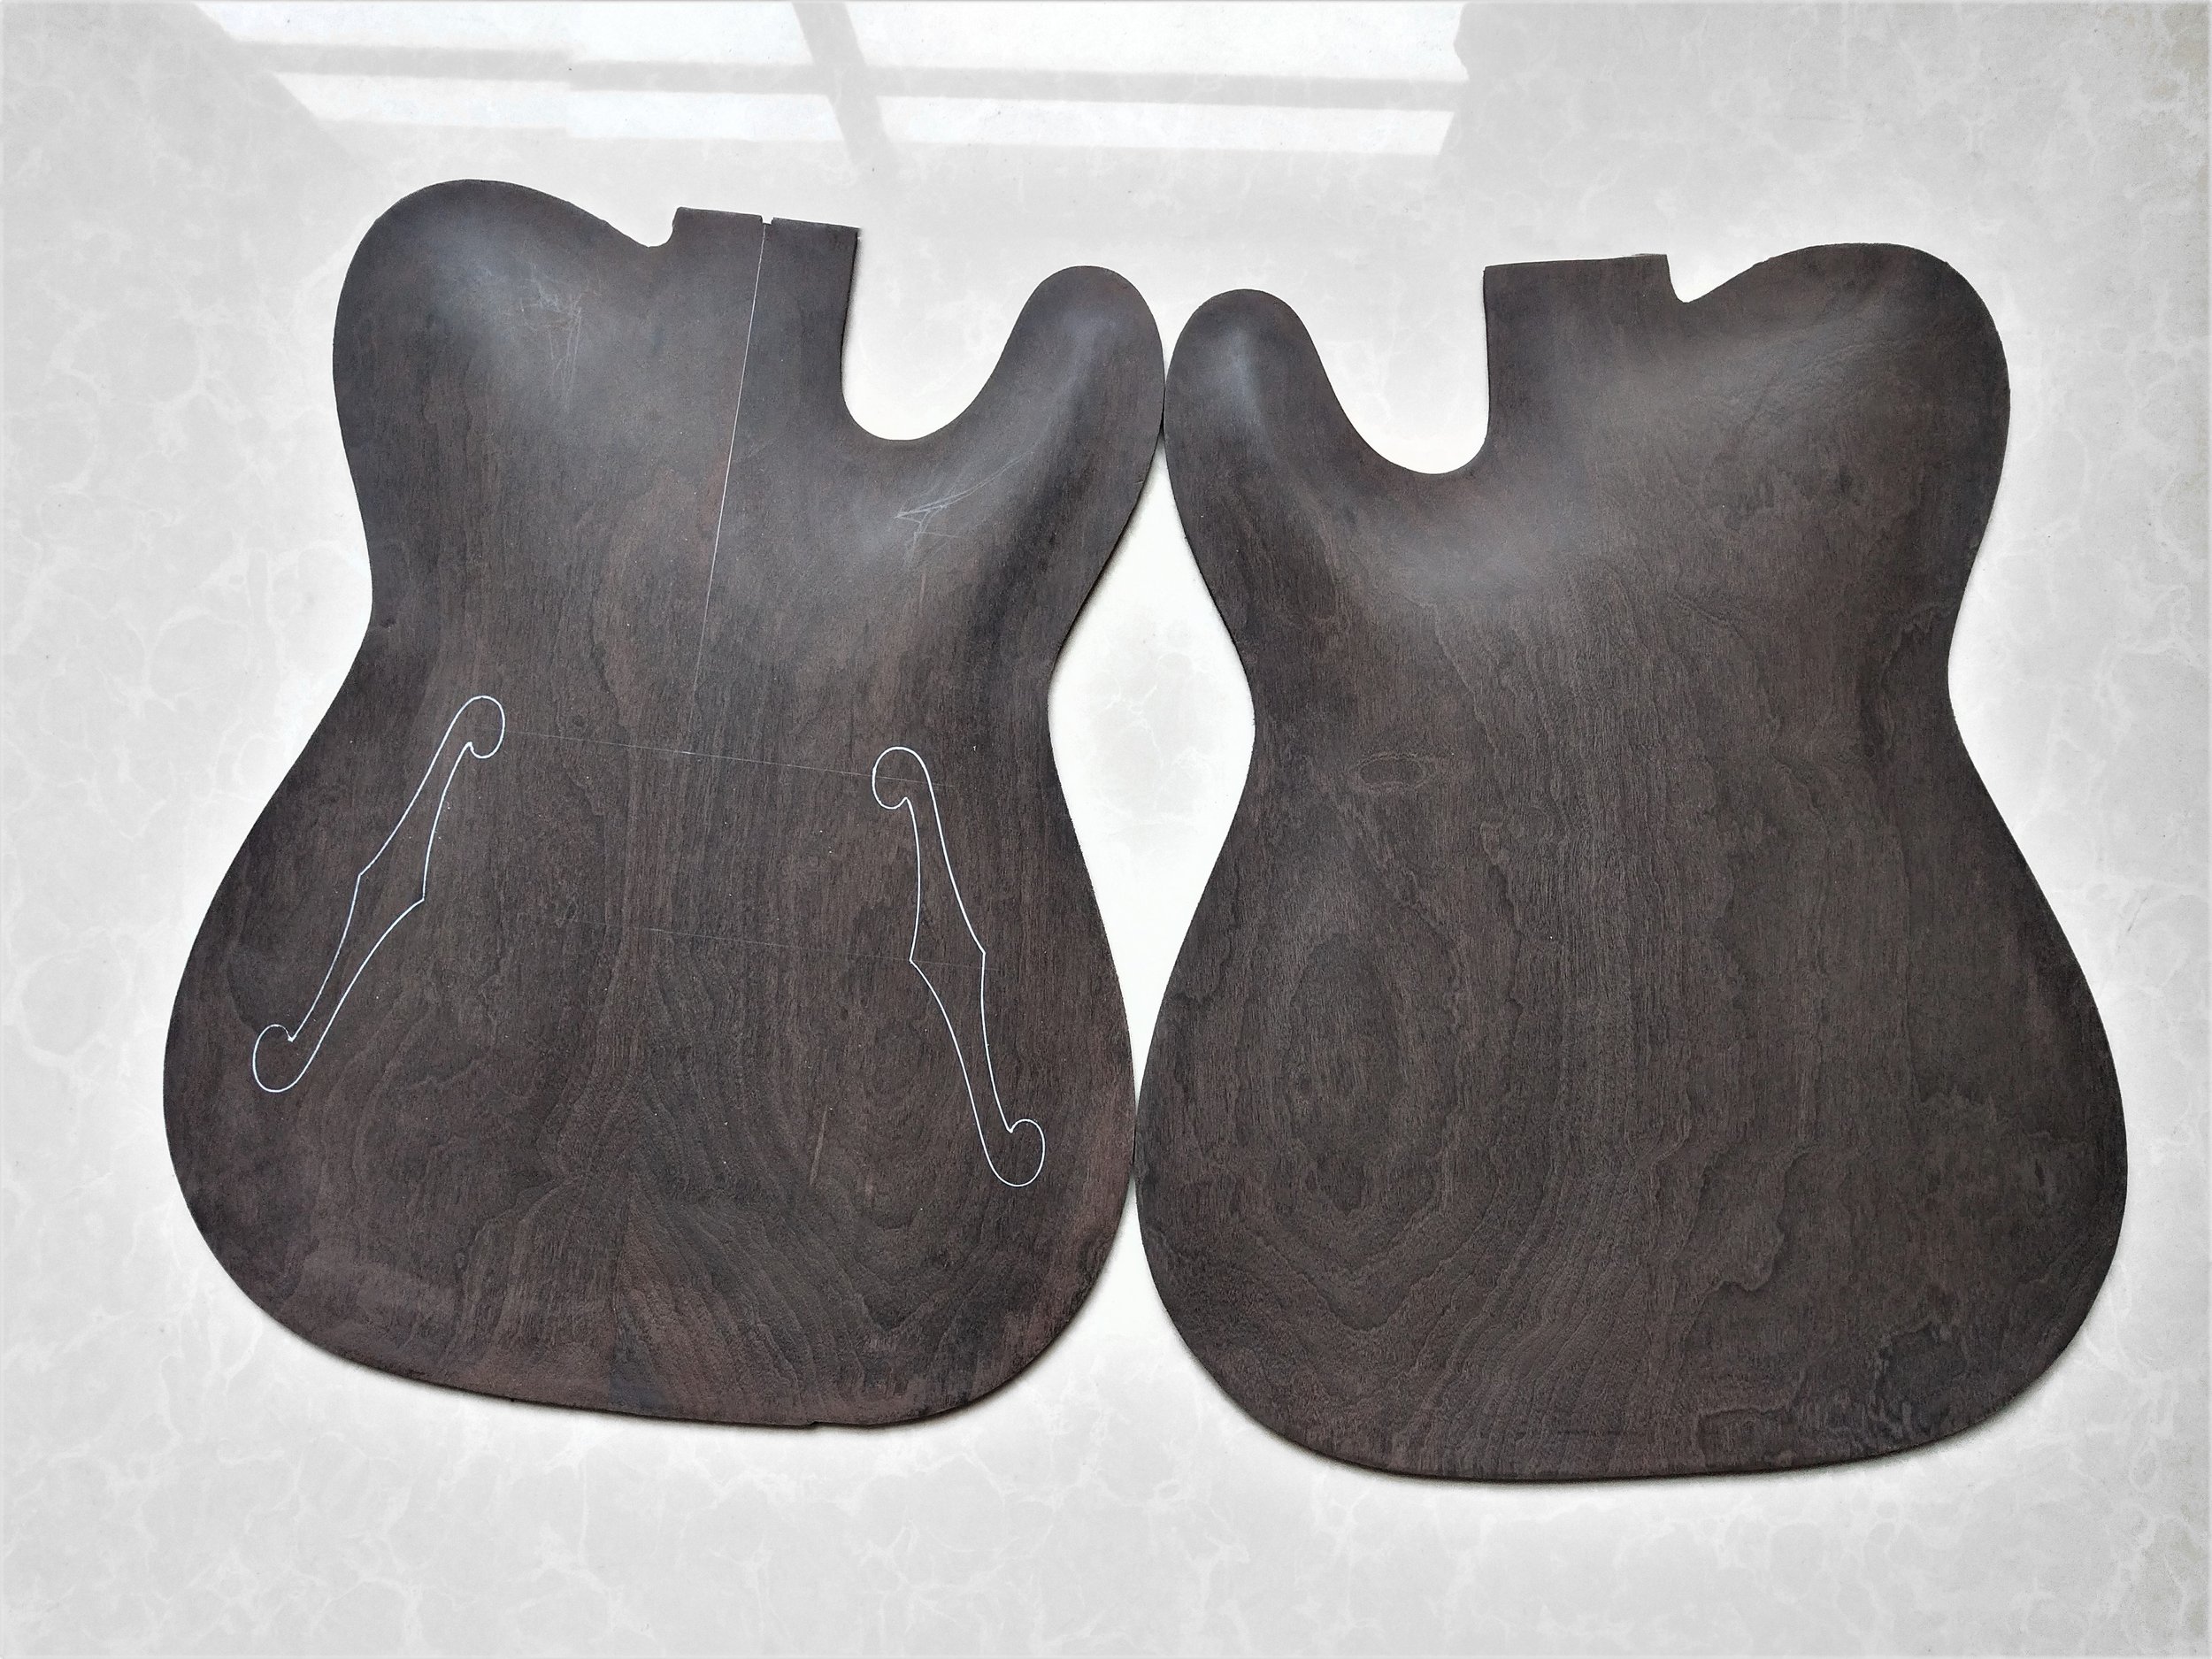 Dejawu Guitars - hand carved top